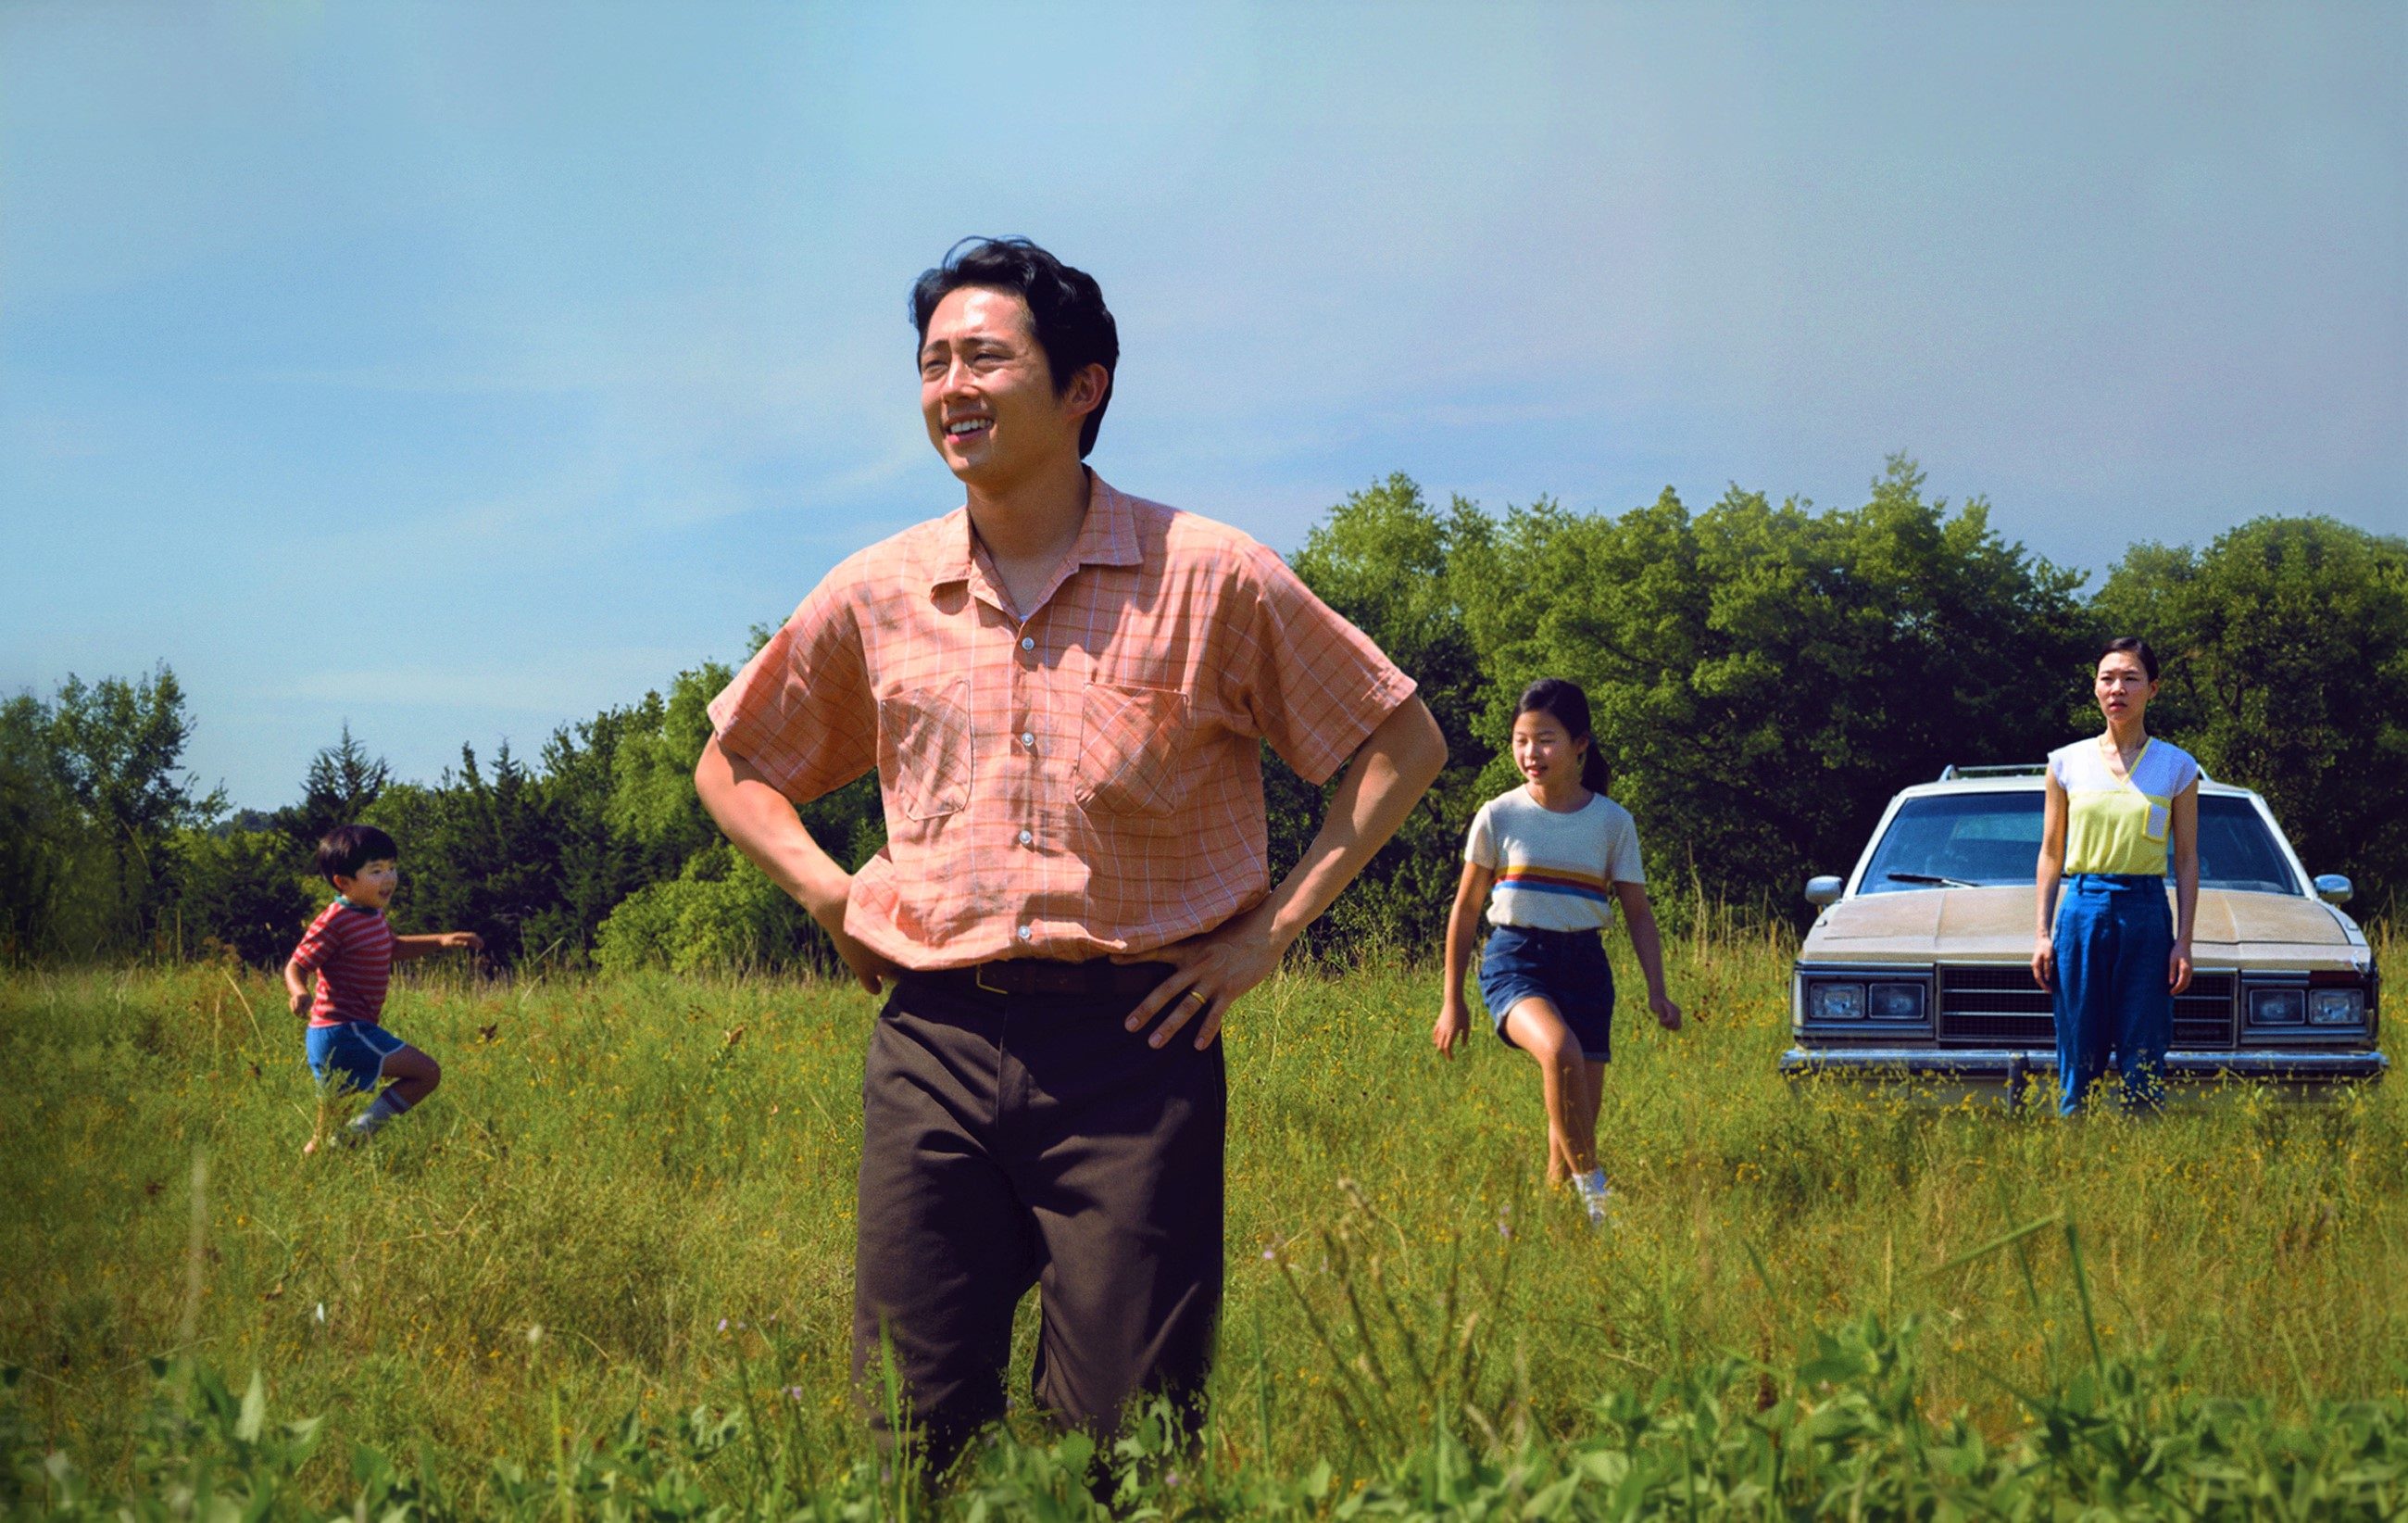 A year after ‘Parasite,’ Korean-language movie ‘Minari’ is talk of Hollywood